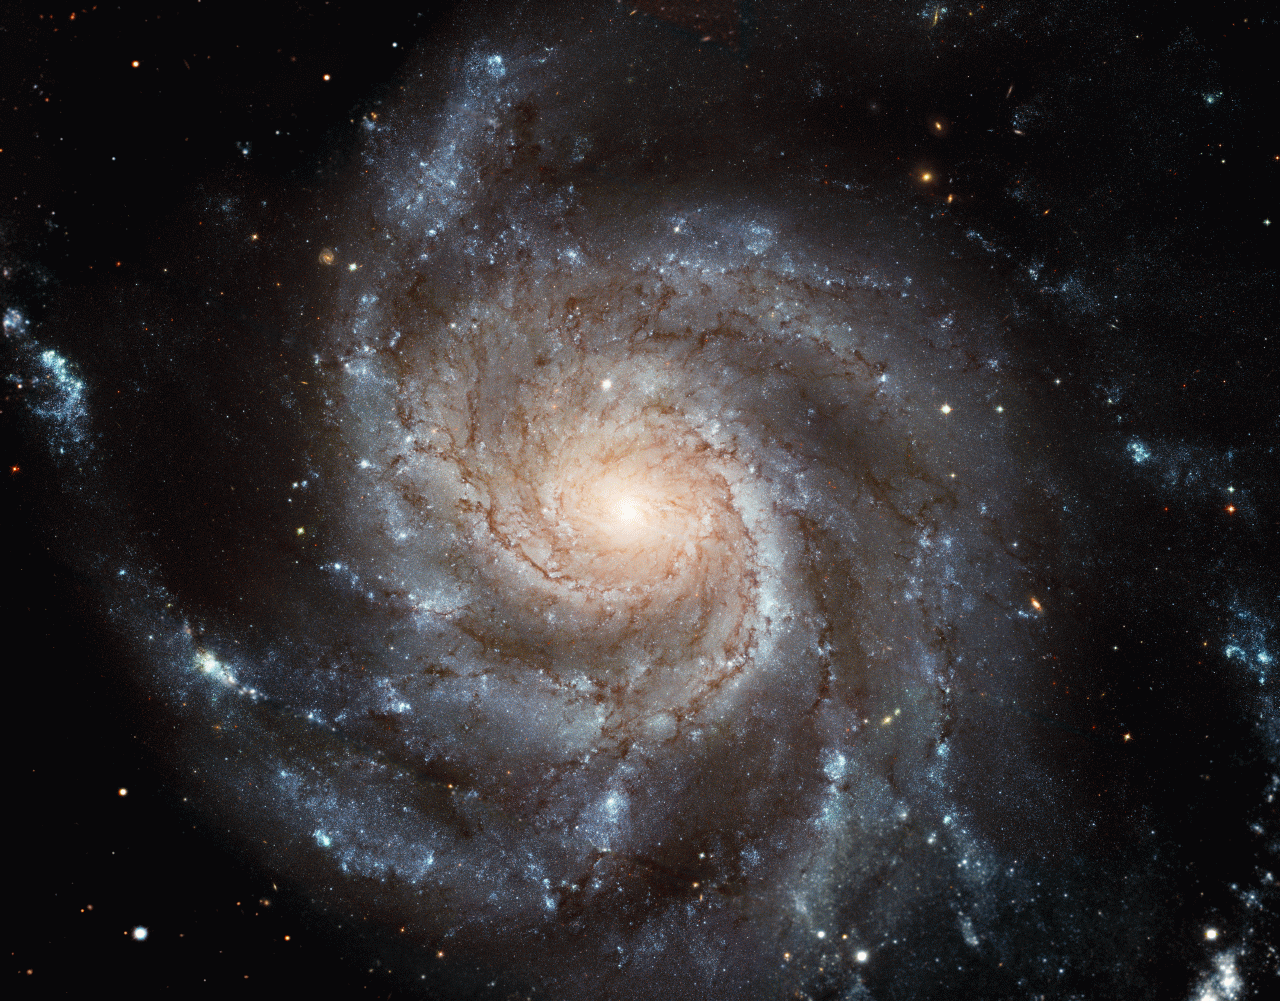 majestic spiral galaxy NGC 4414